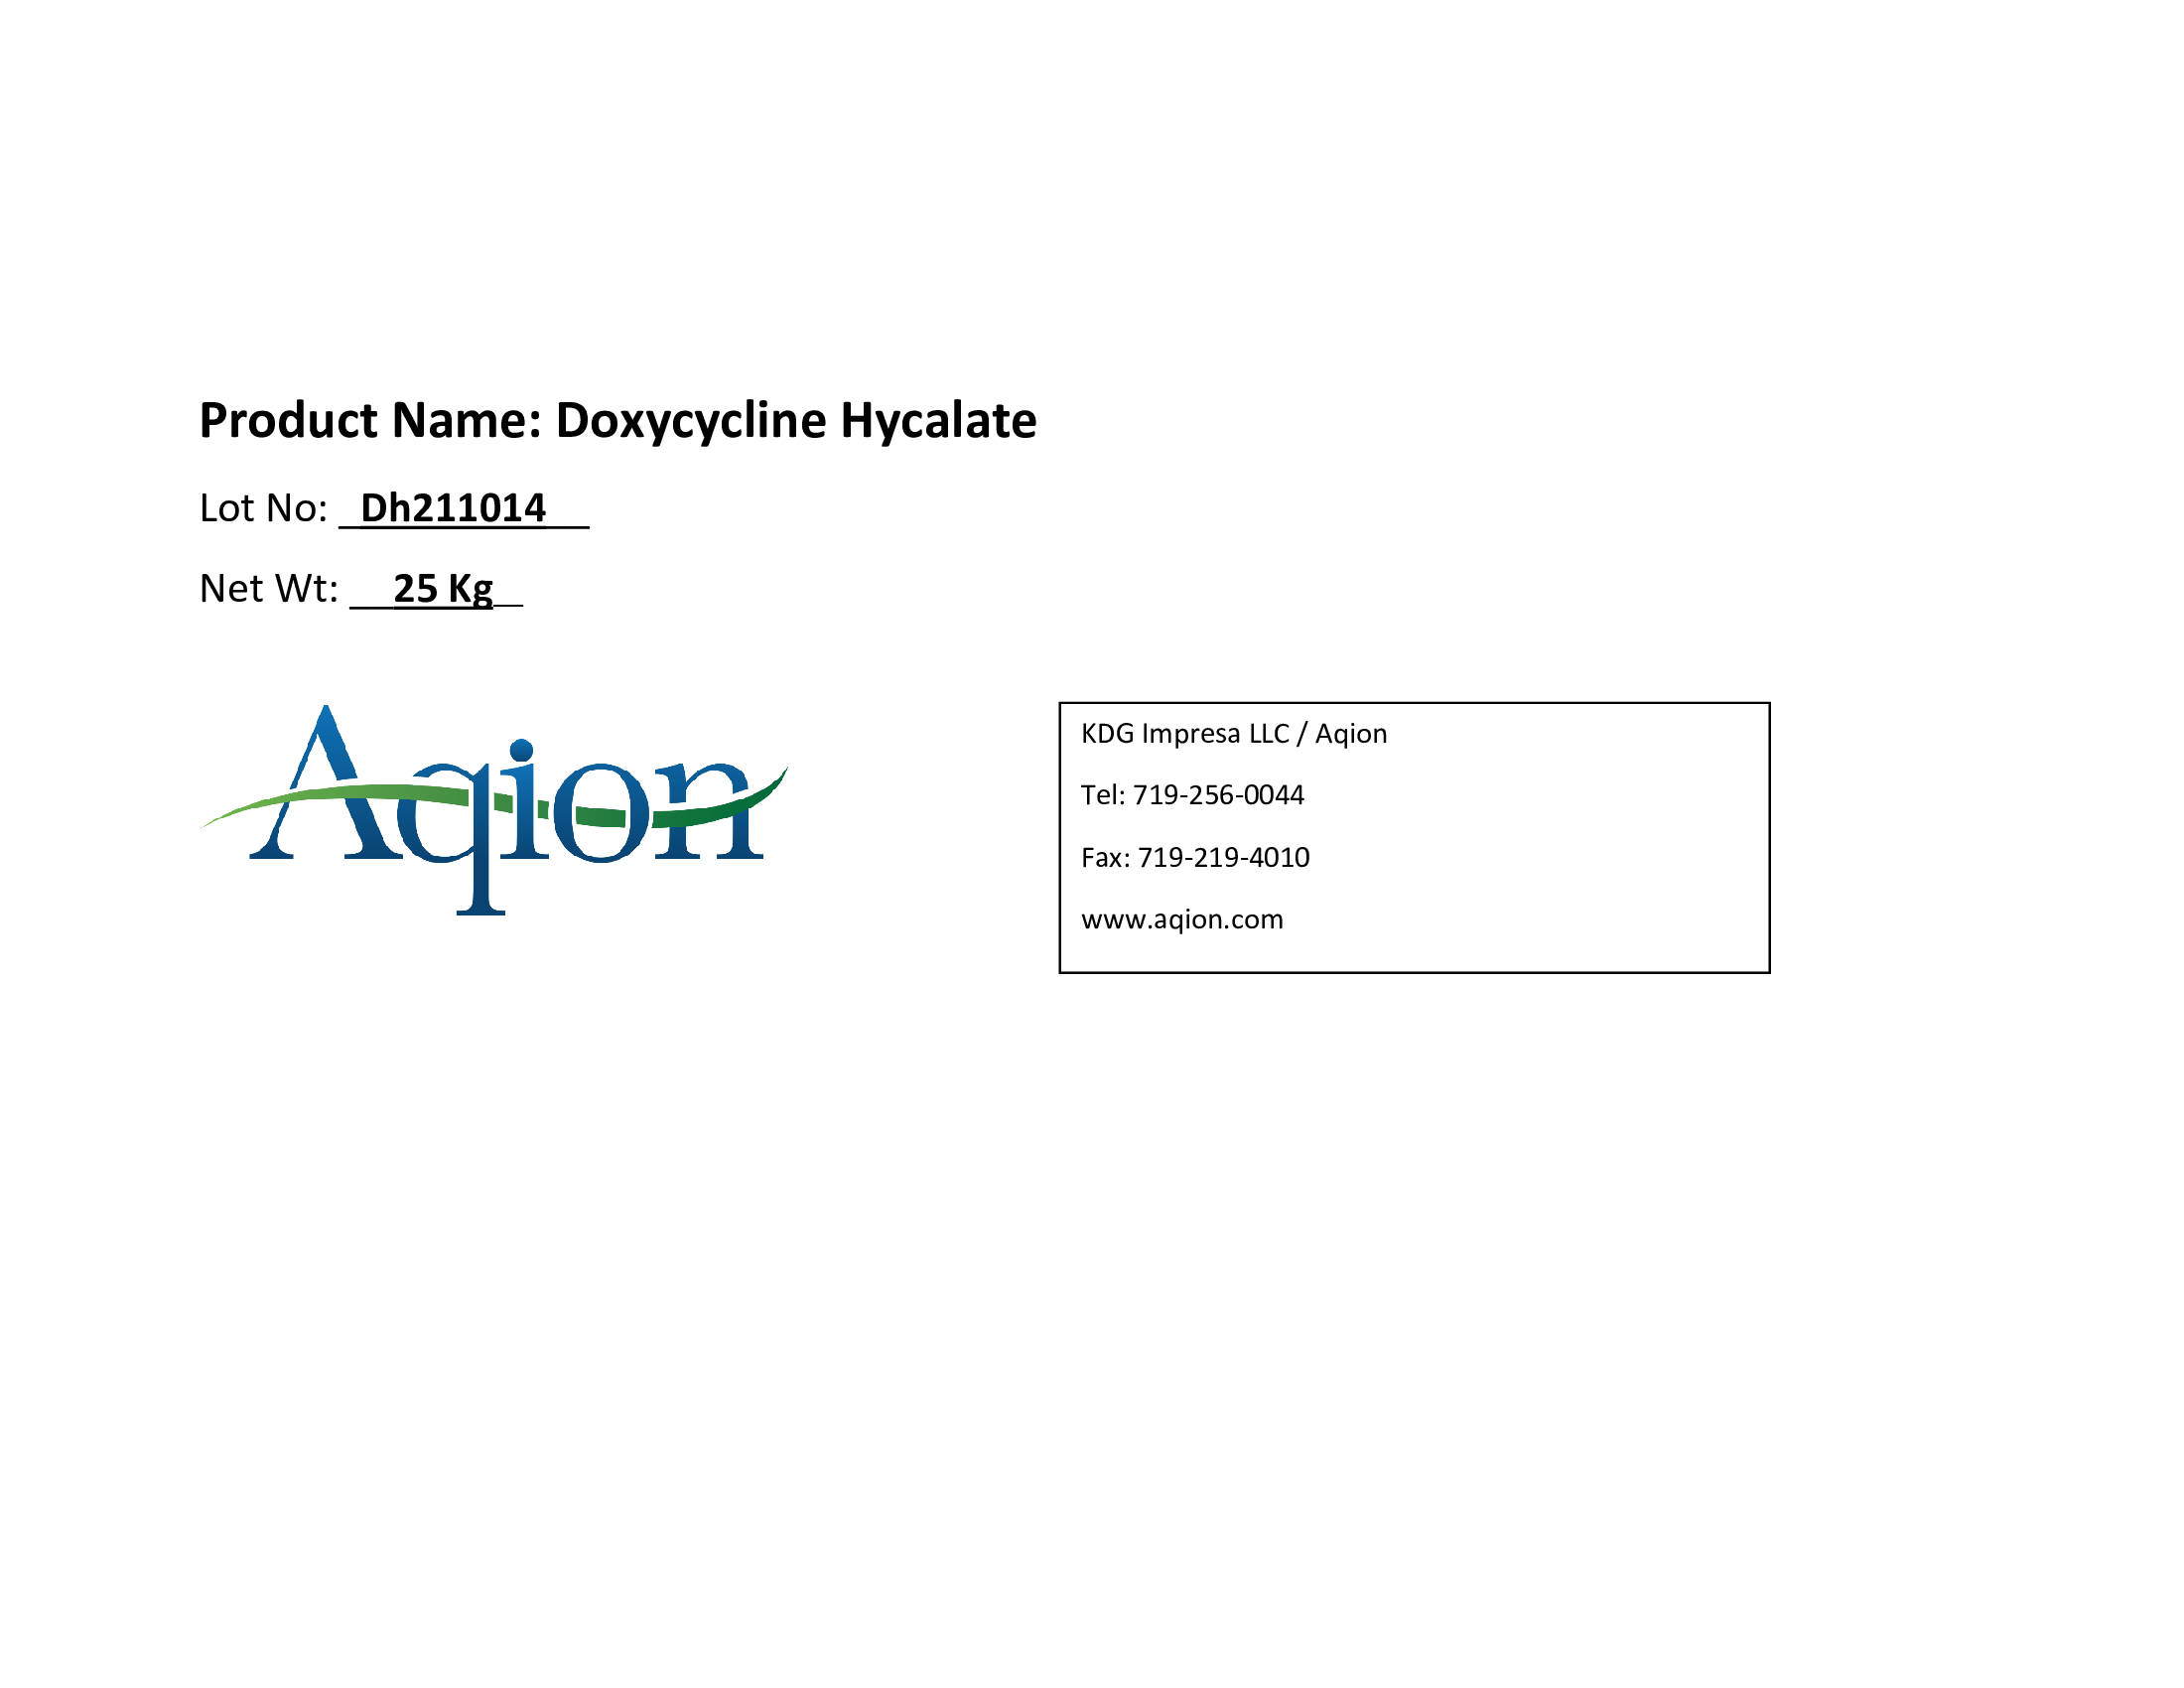 Doxycycline Hycalate Bulk Label